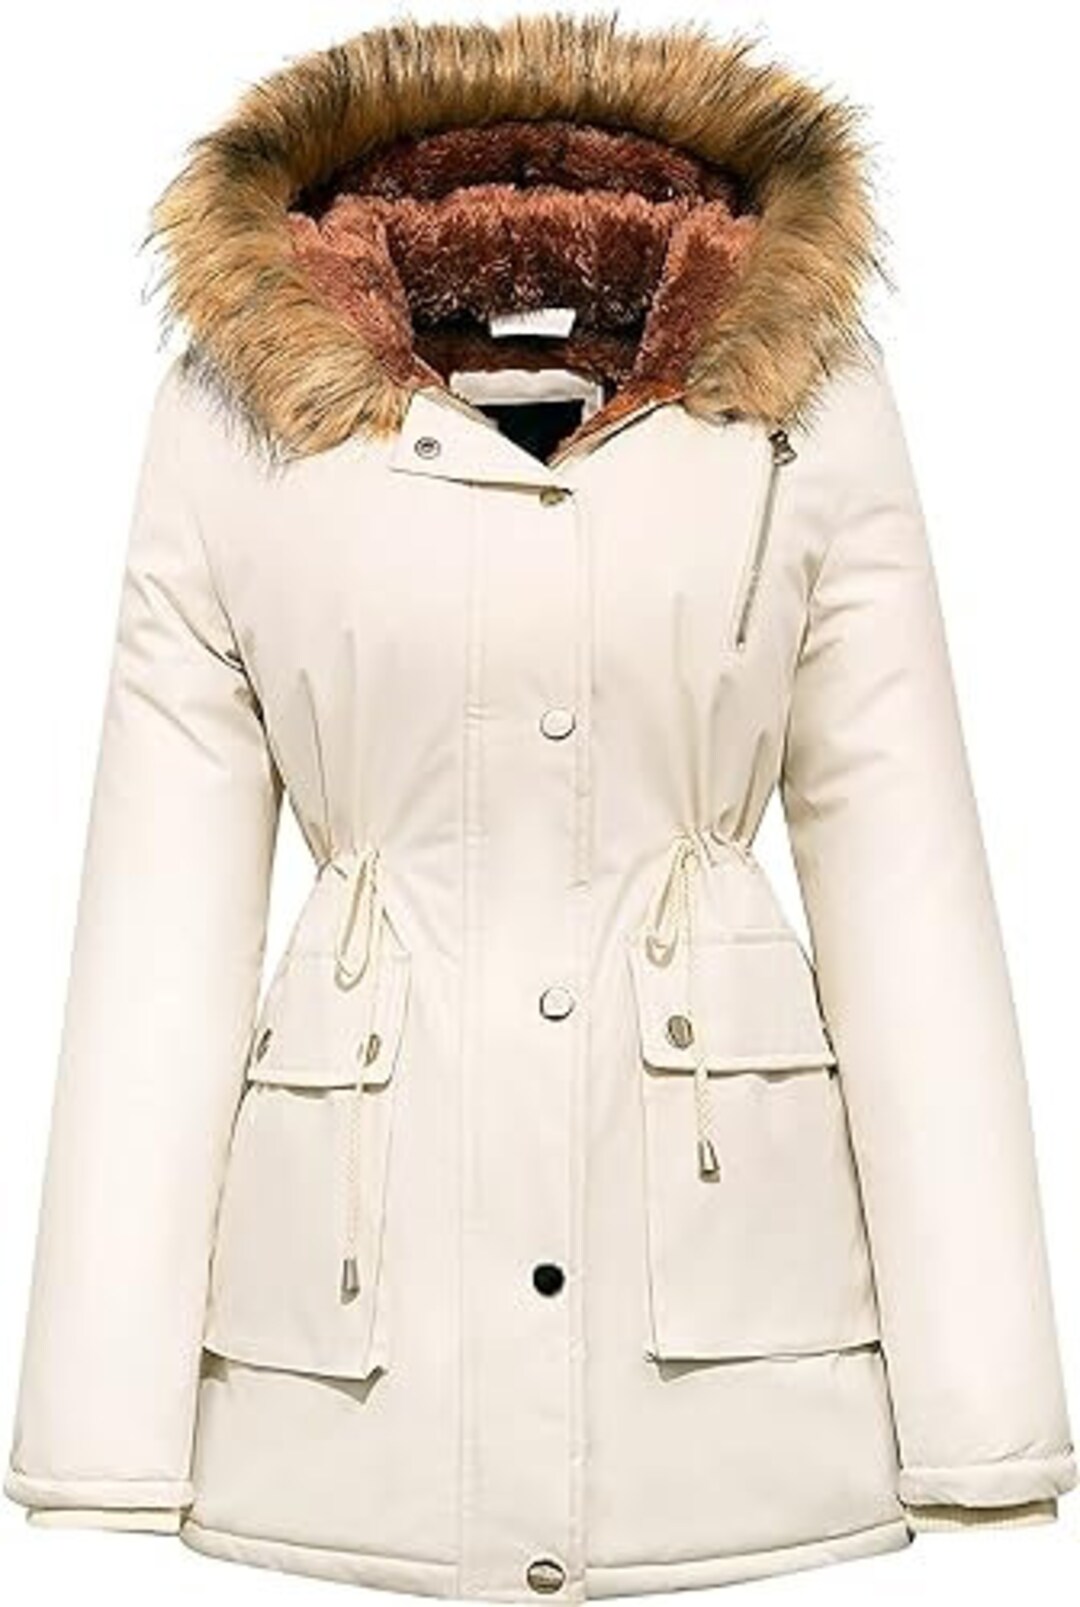 Women Winter Water-resistance Coat Thicken Puffer Jacket Warm Fleece ...